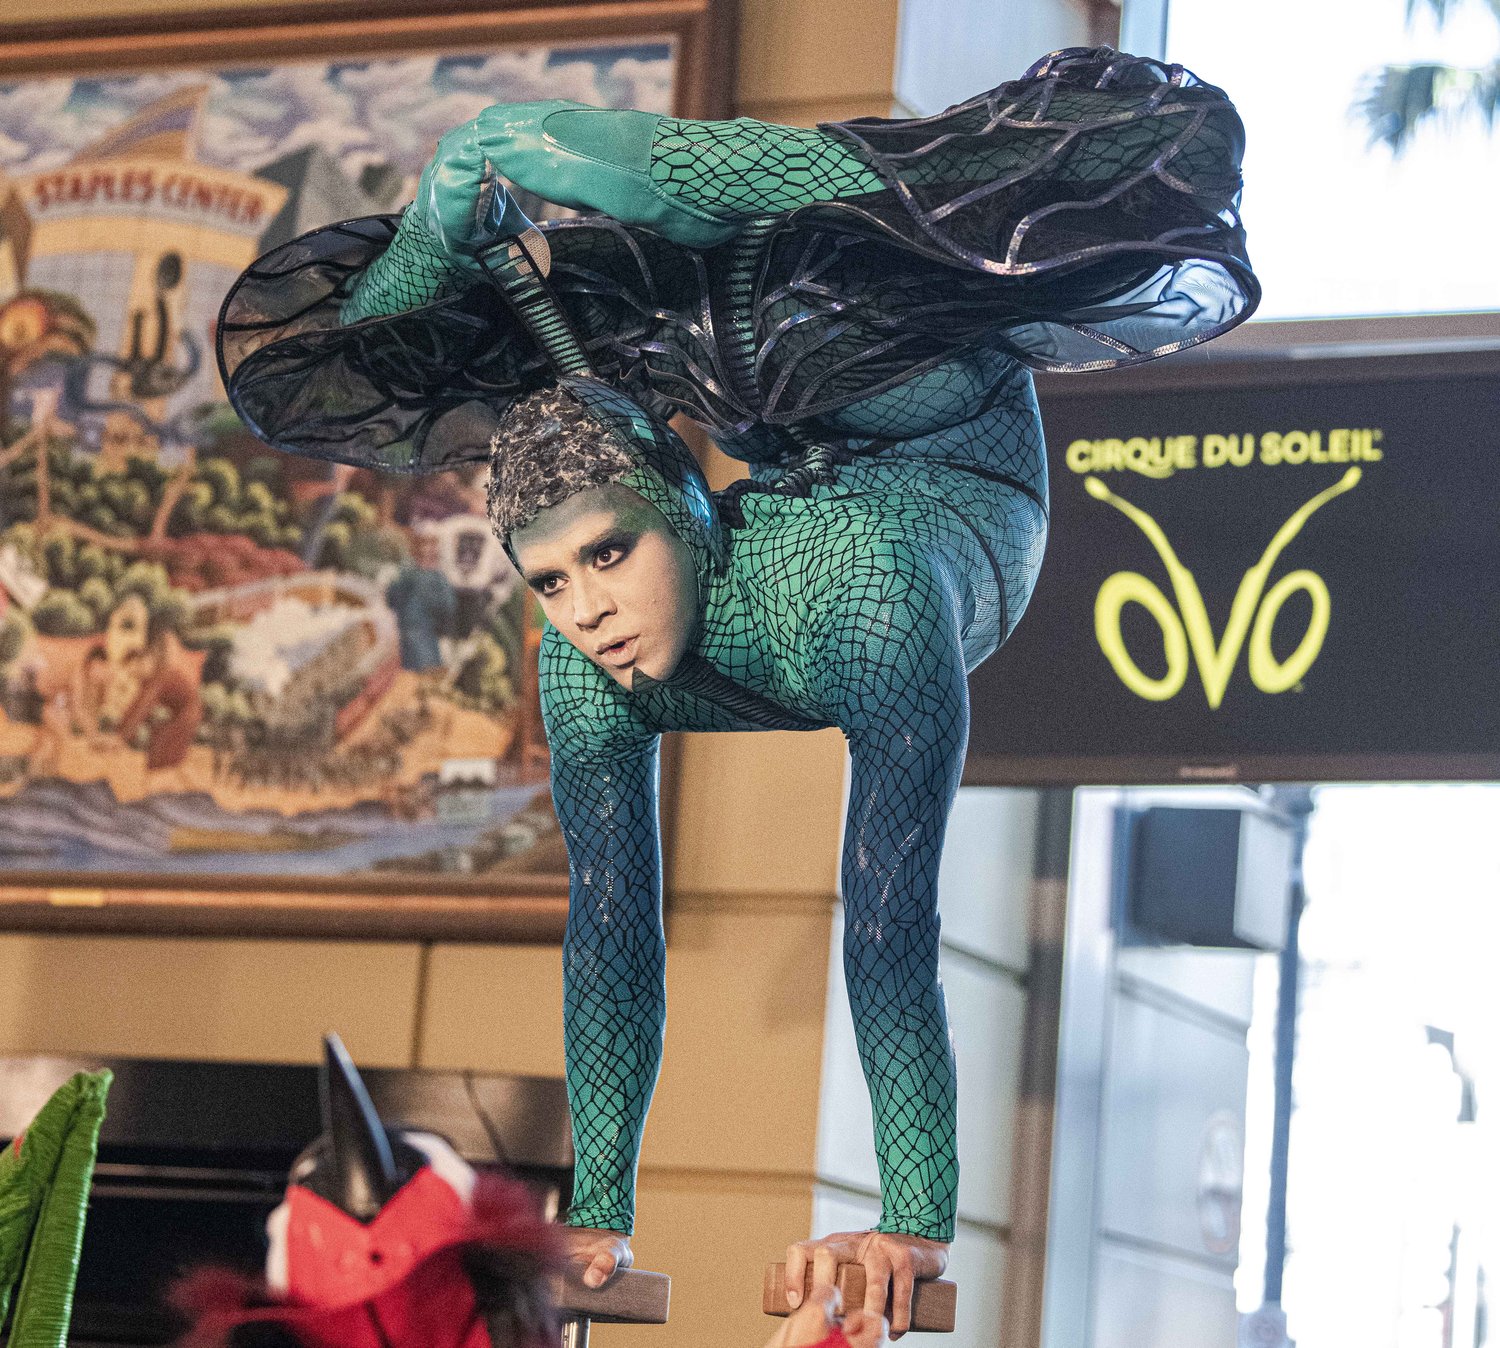 Cirque Du Soleil Returns to L.A. — The